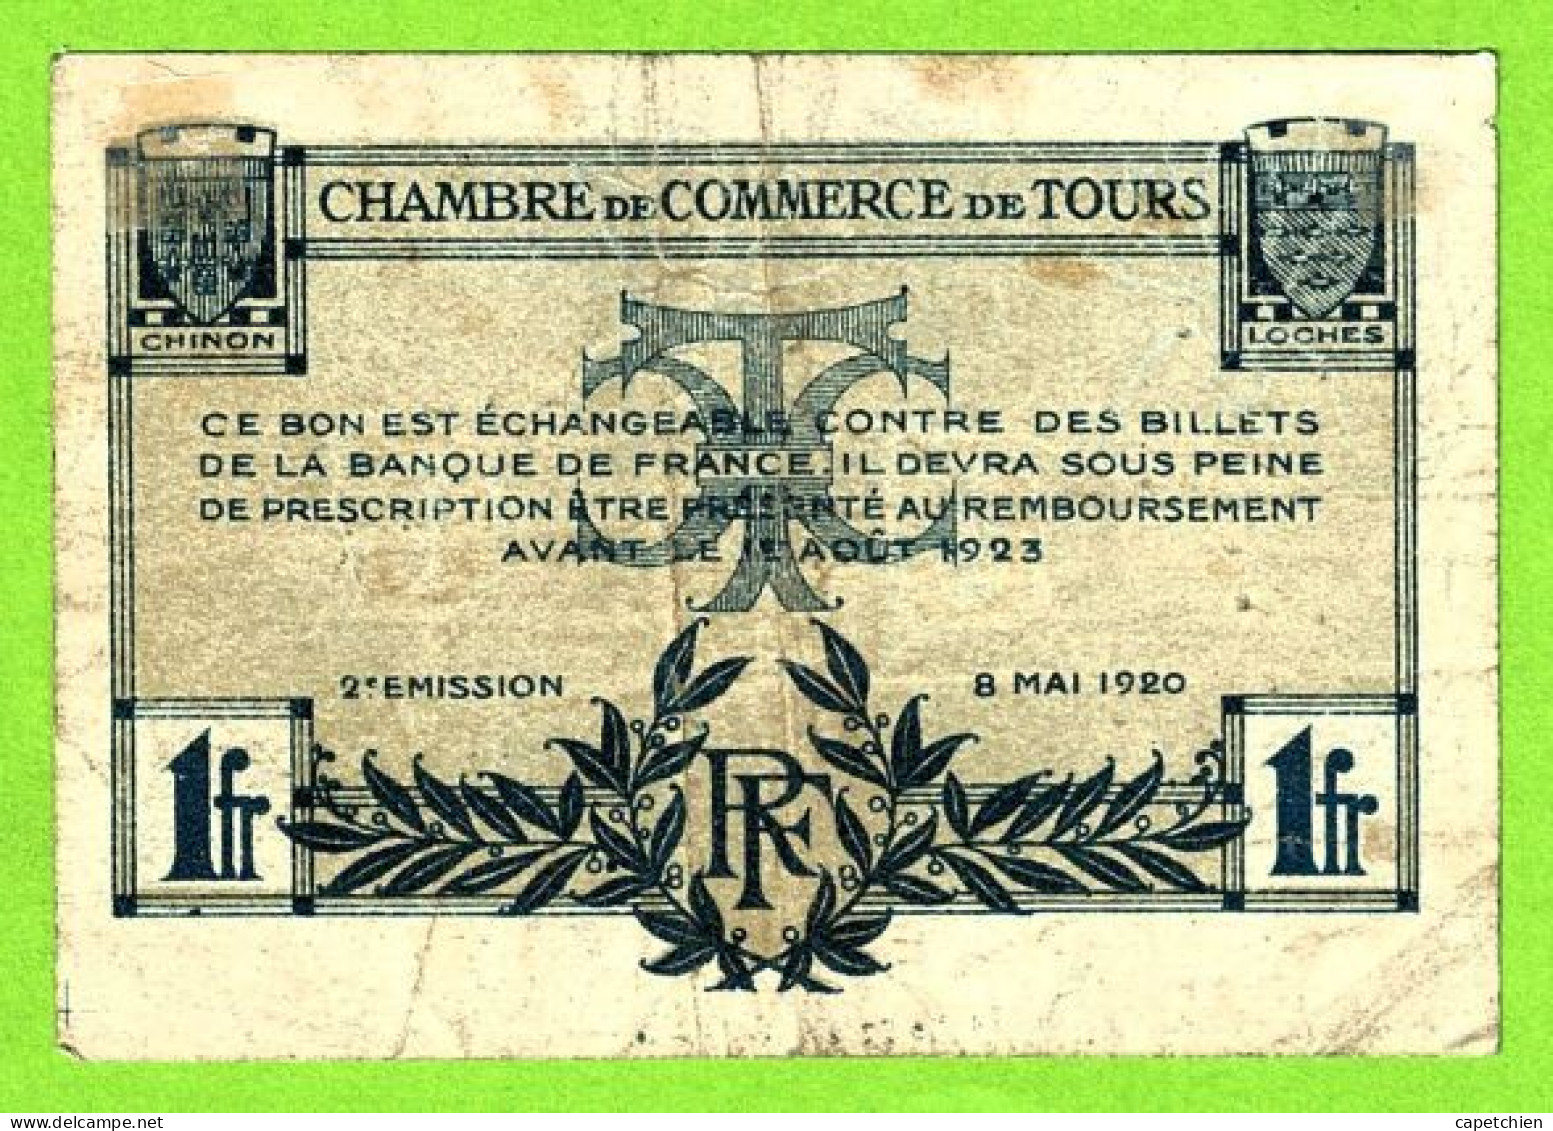 FRANCE / CHAMBRE De COMMERCE De TOURS / 1 FRANC / 8 MAI 1920 / 409024 / SERIE 2eme - Cámara De Comercio